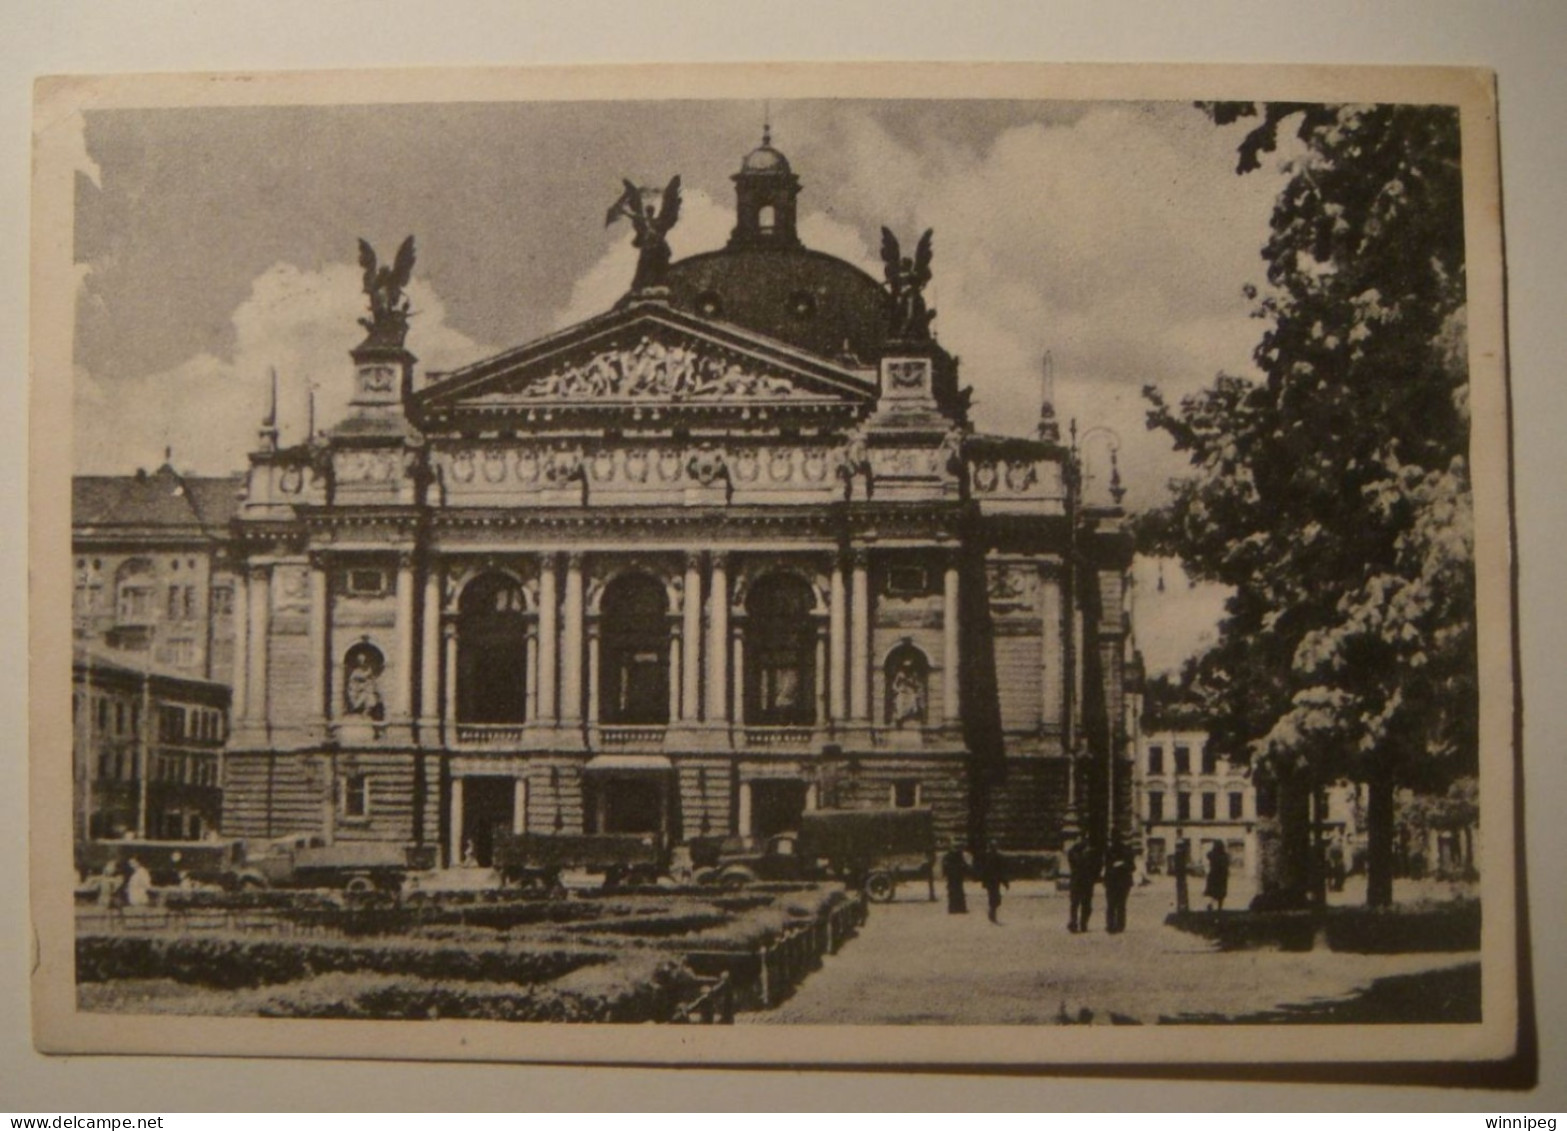 Lwow.Lemberg.2 Pc's.WWII.Operhaus.1942.German Occupation.Boim Kapelle.1943.Nowakowska-Acedanska.Poland.Ukraine - Ukraine